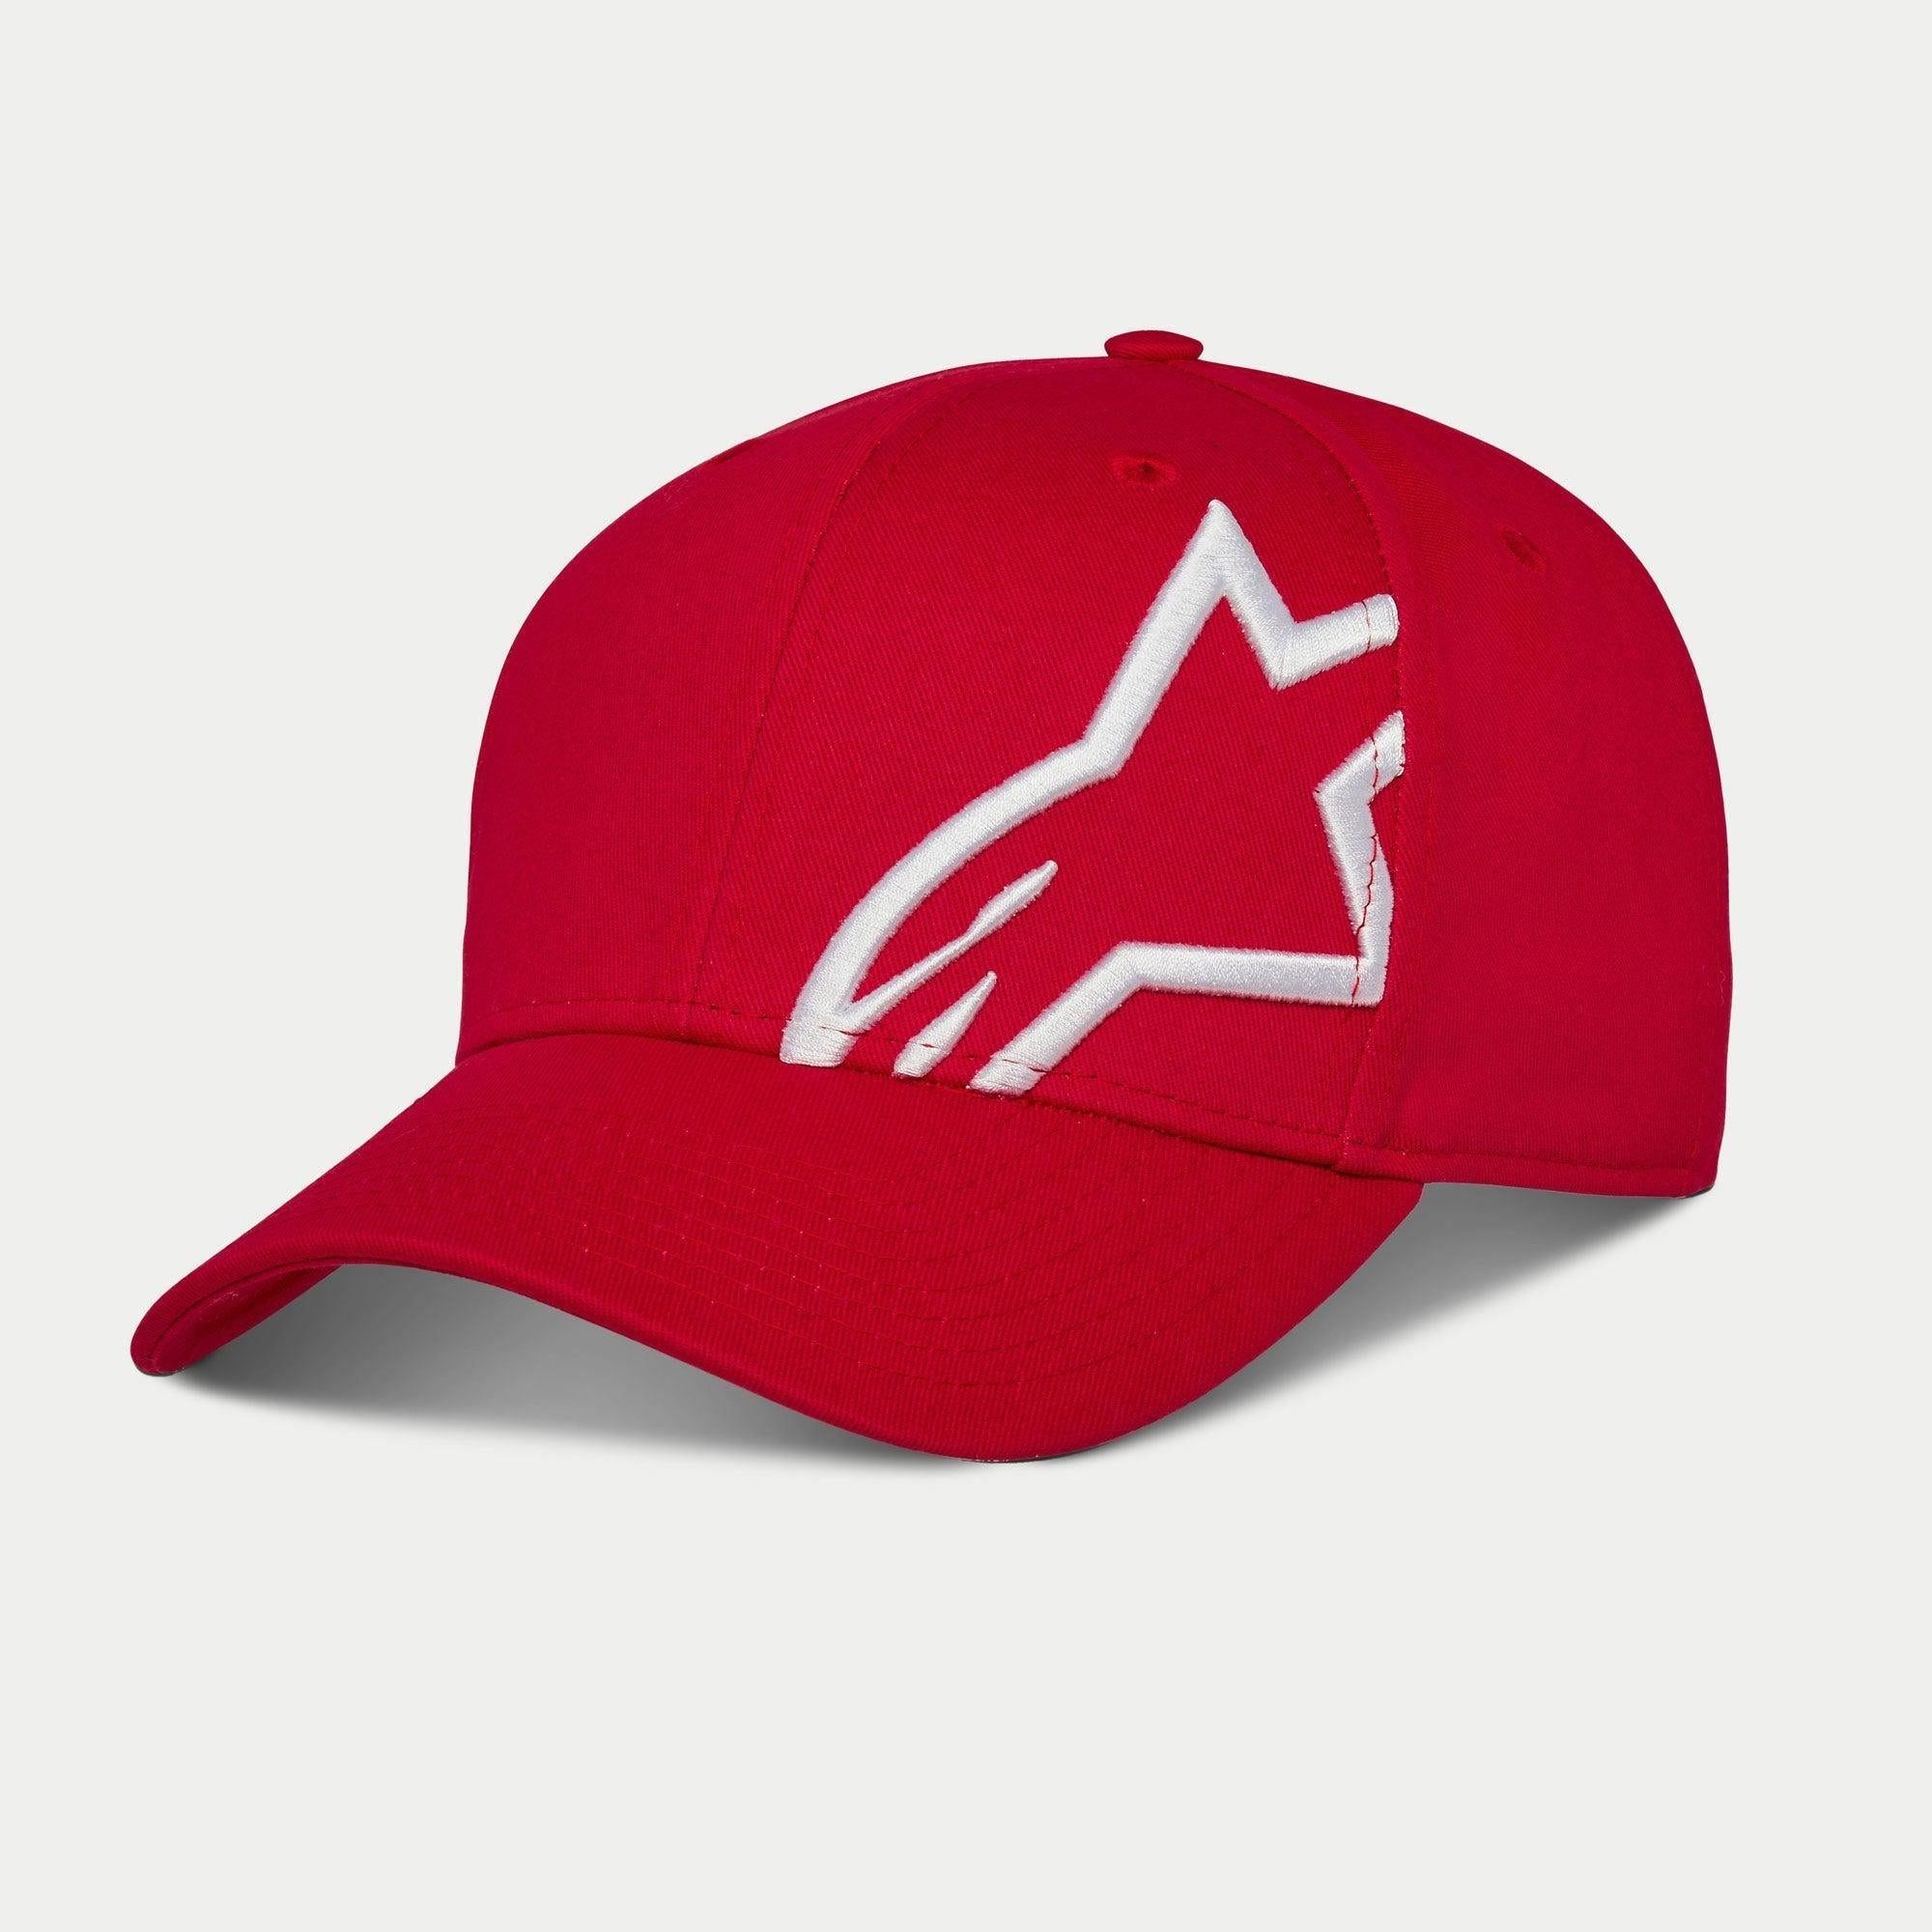 Corp Snap 2 Hat | Alpinestars